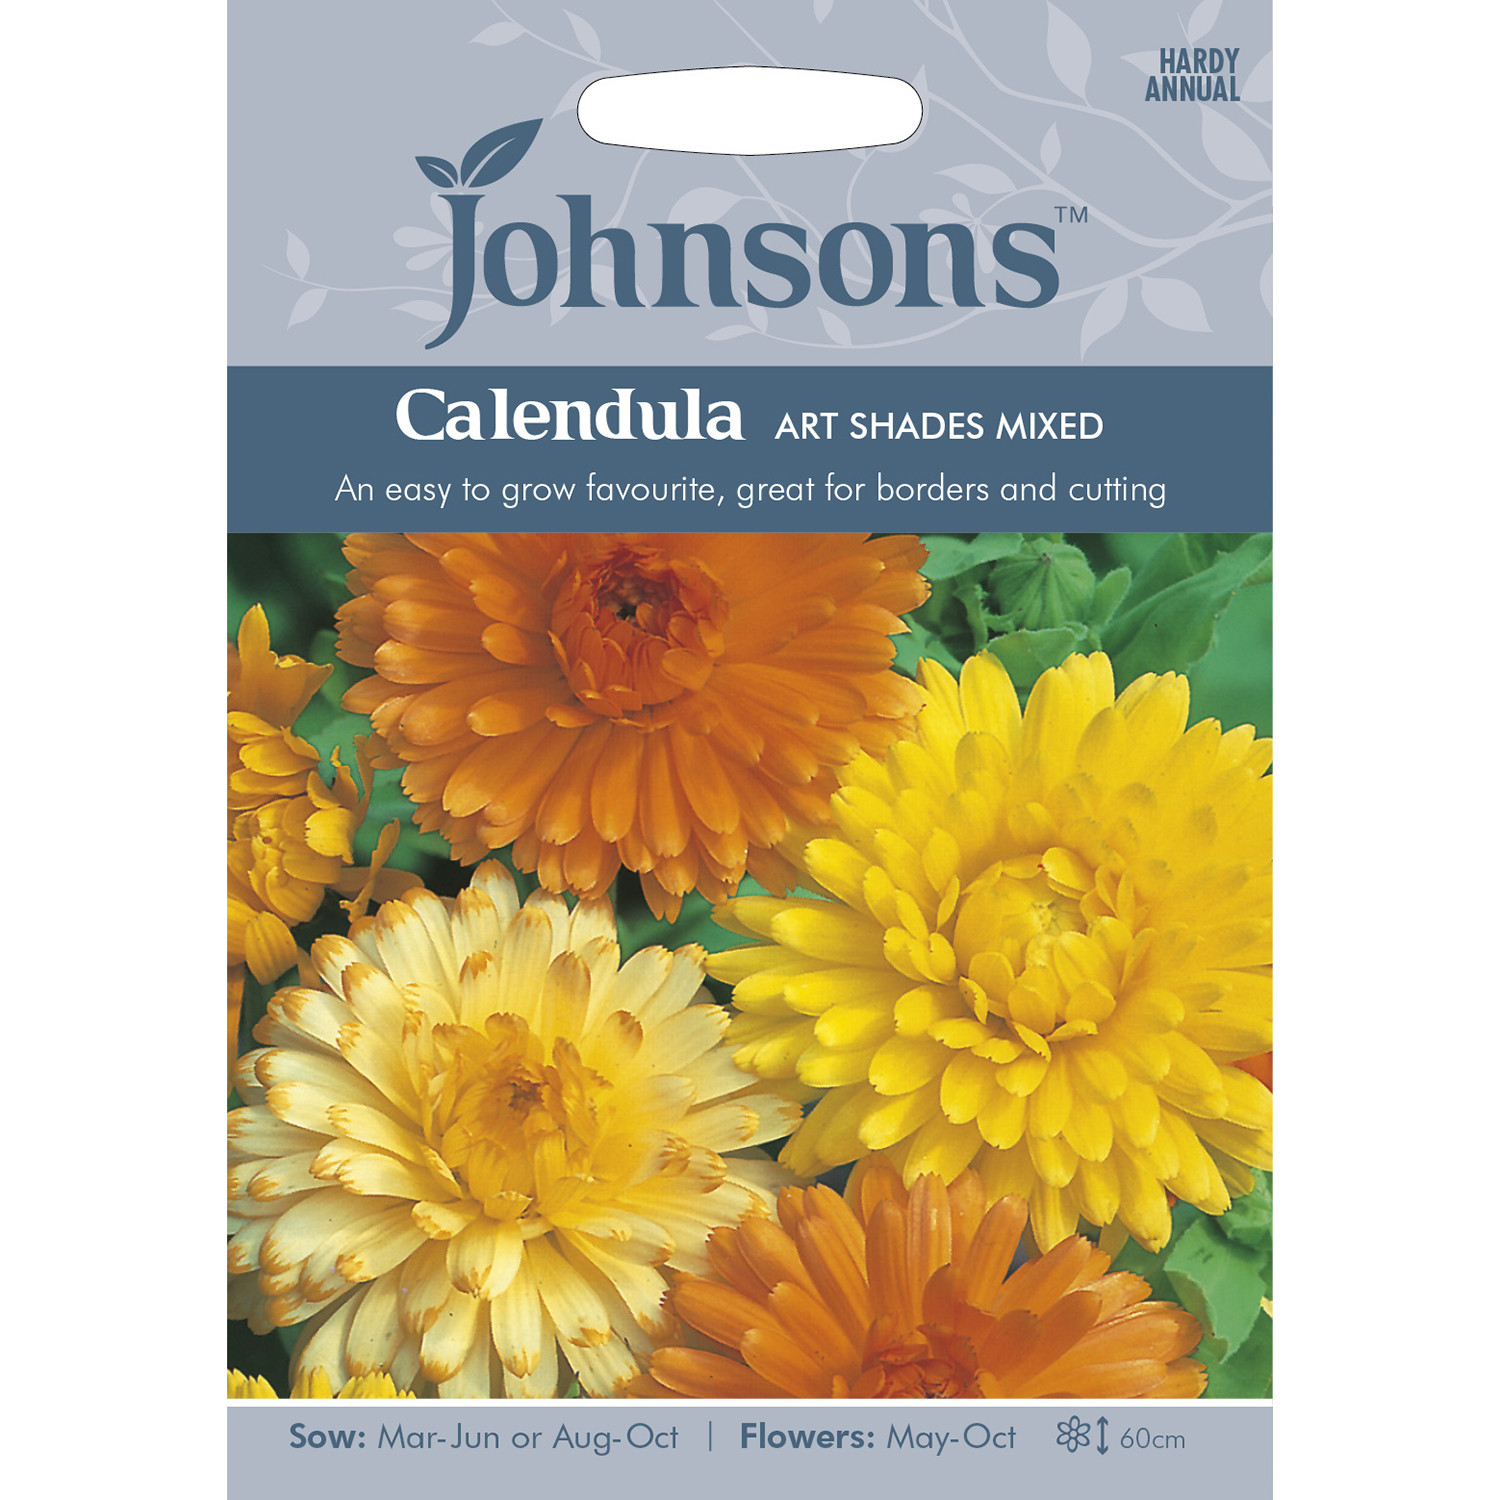 Johnsons Calendula Art Shades Mixed Flower Seeds Image 2